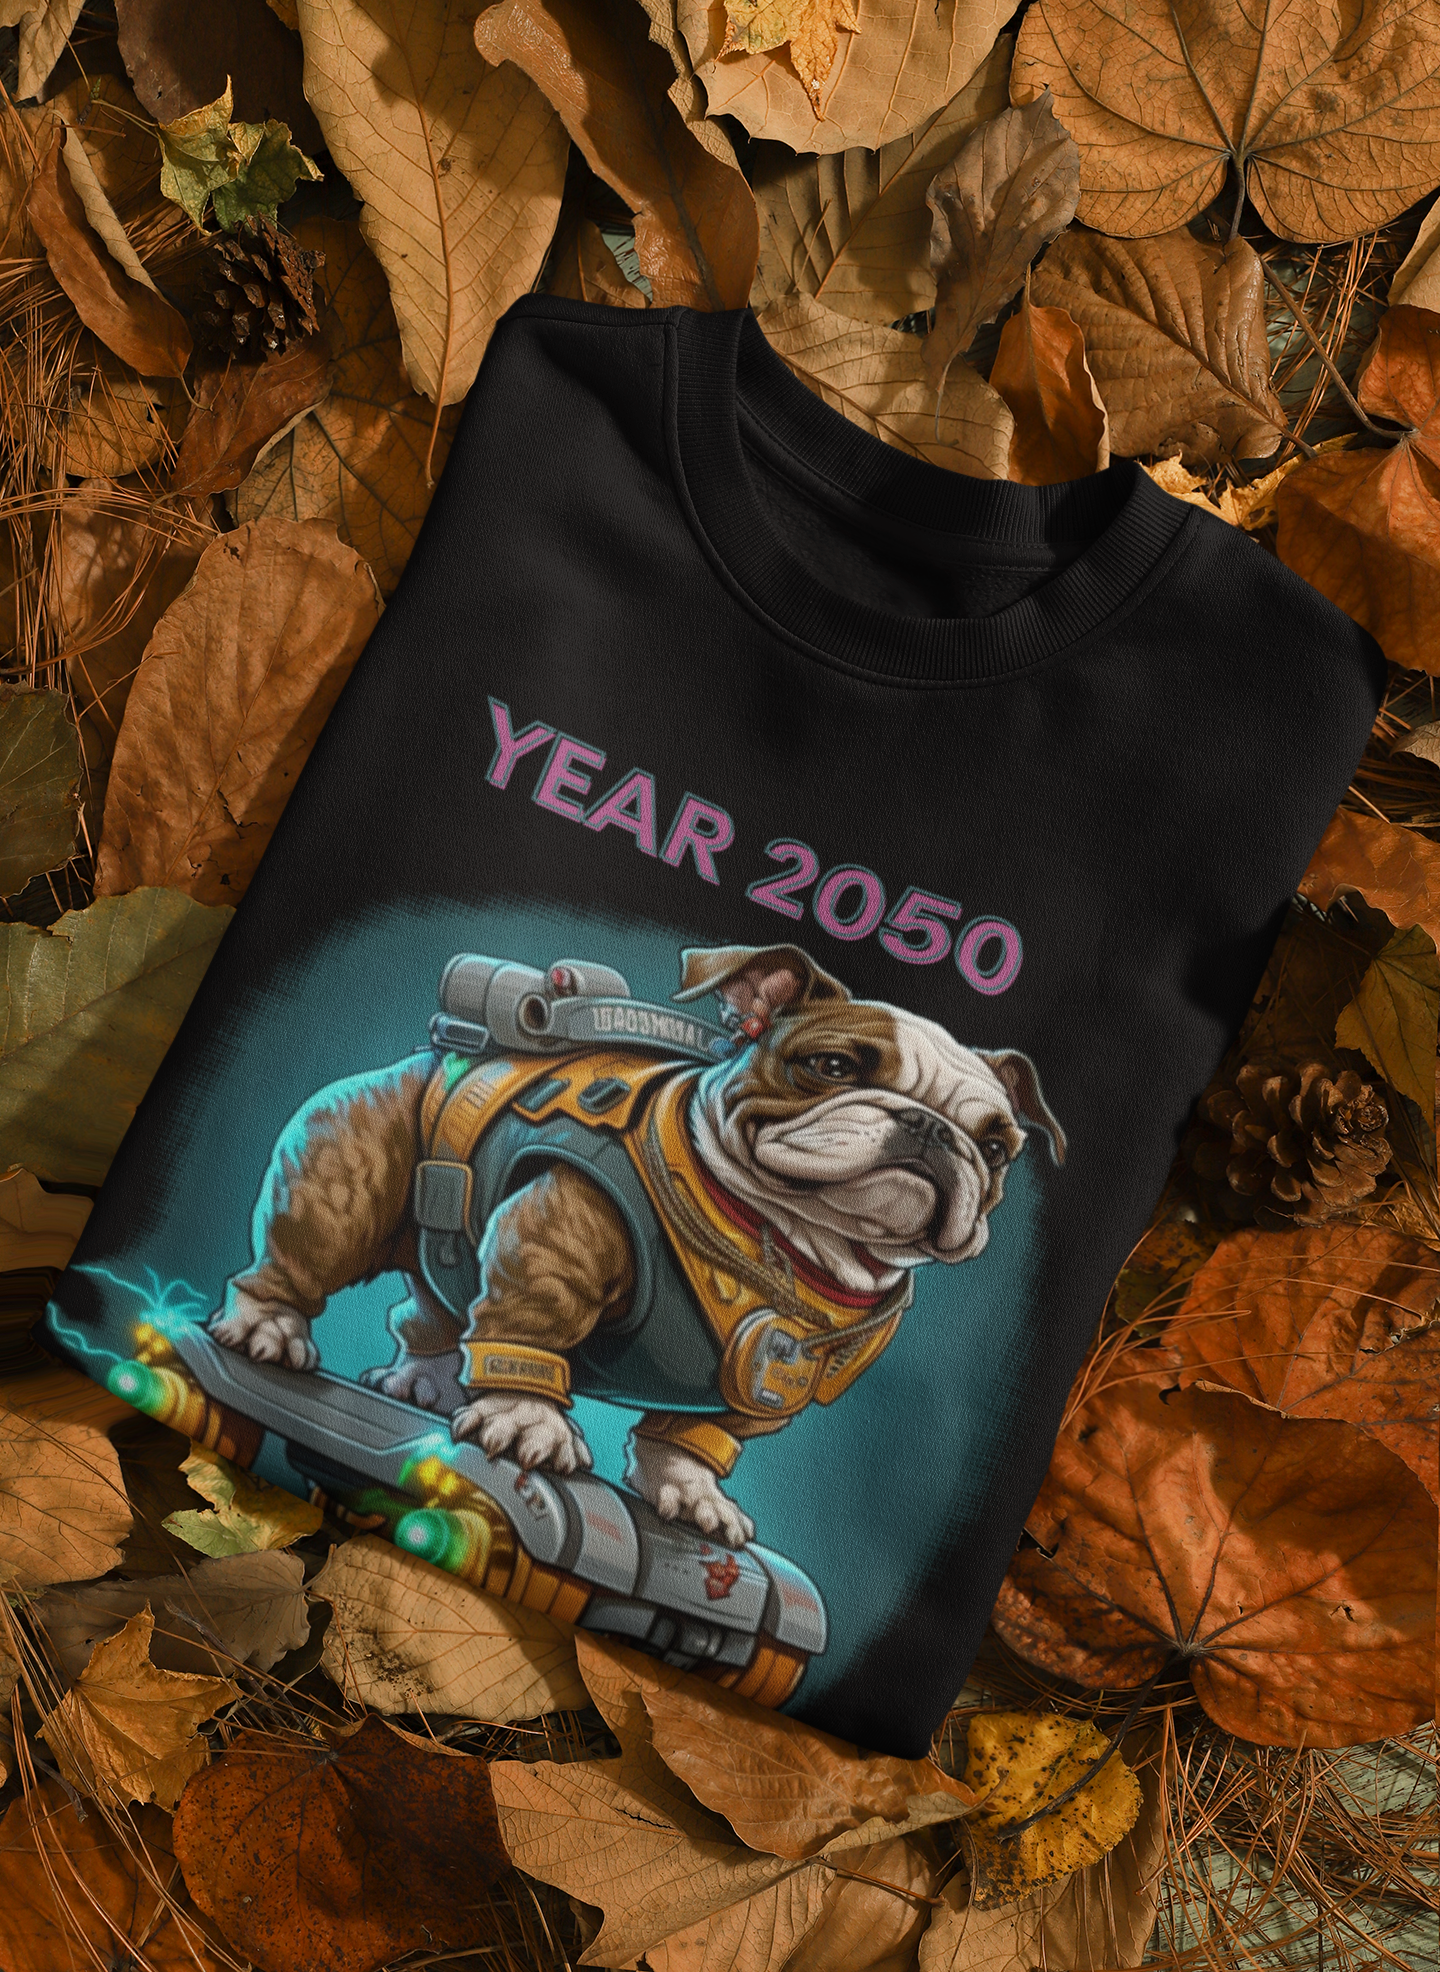 Crewneck Sweatshirt Year 2050